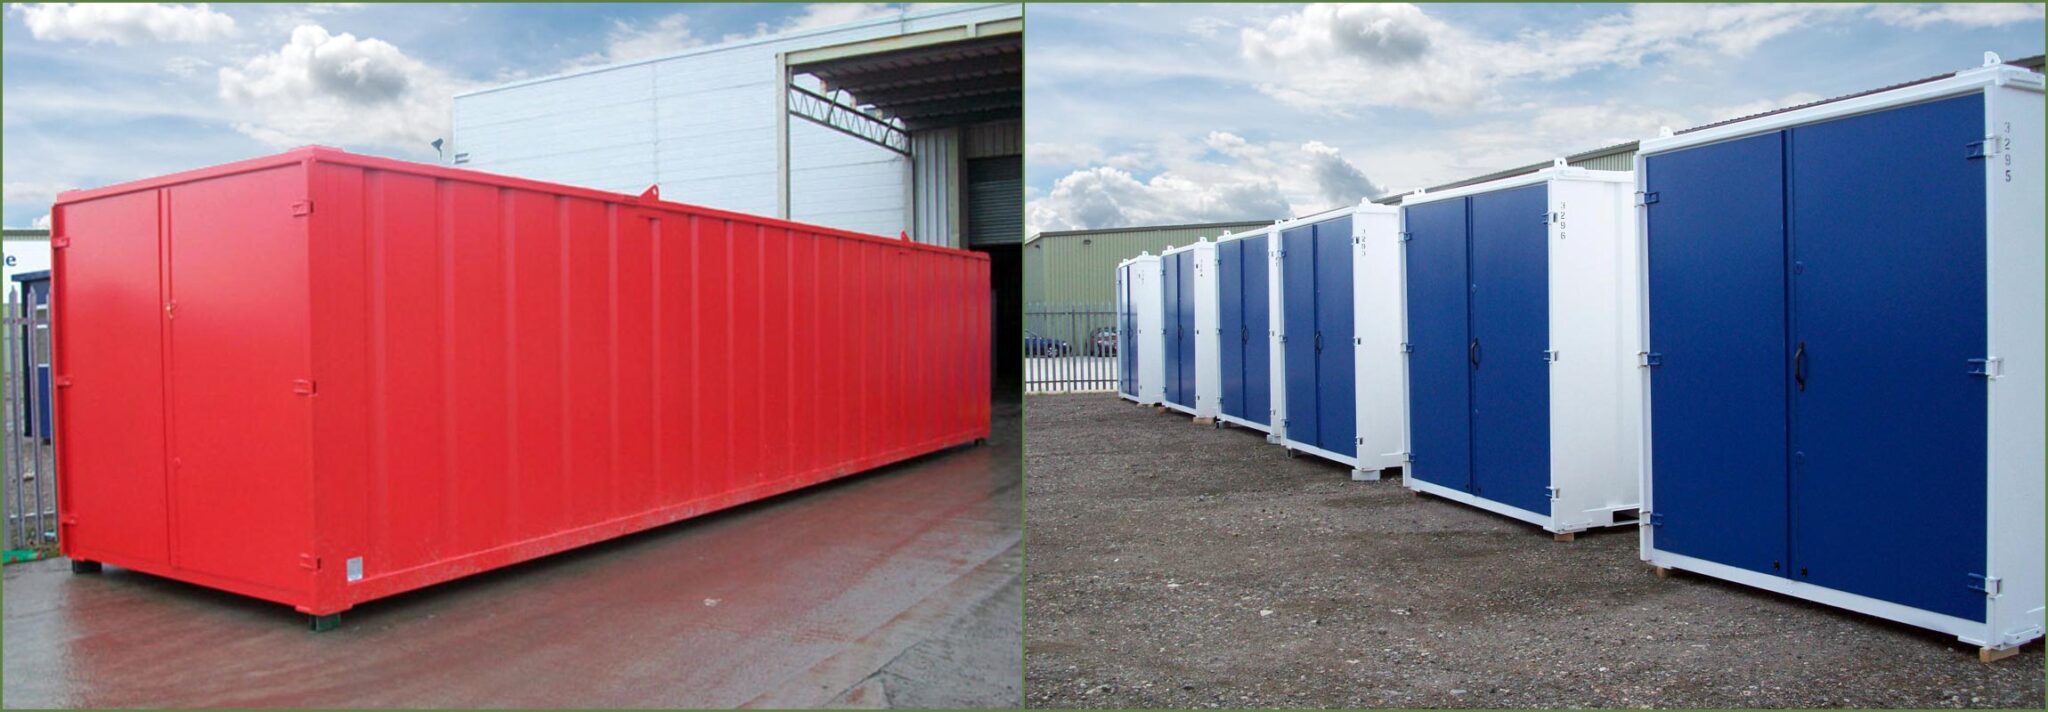 Providers of Anti-Vandal Storage Units UK